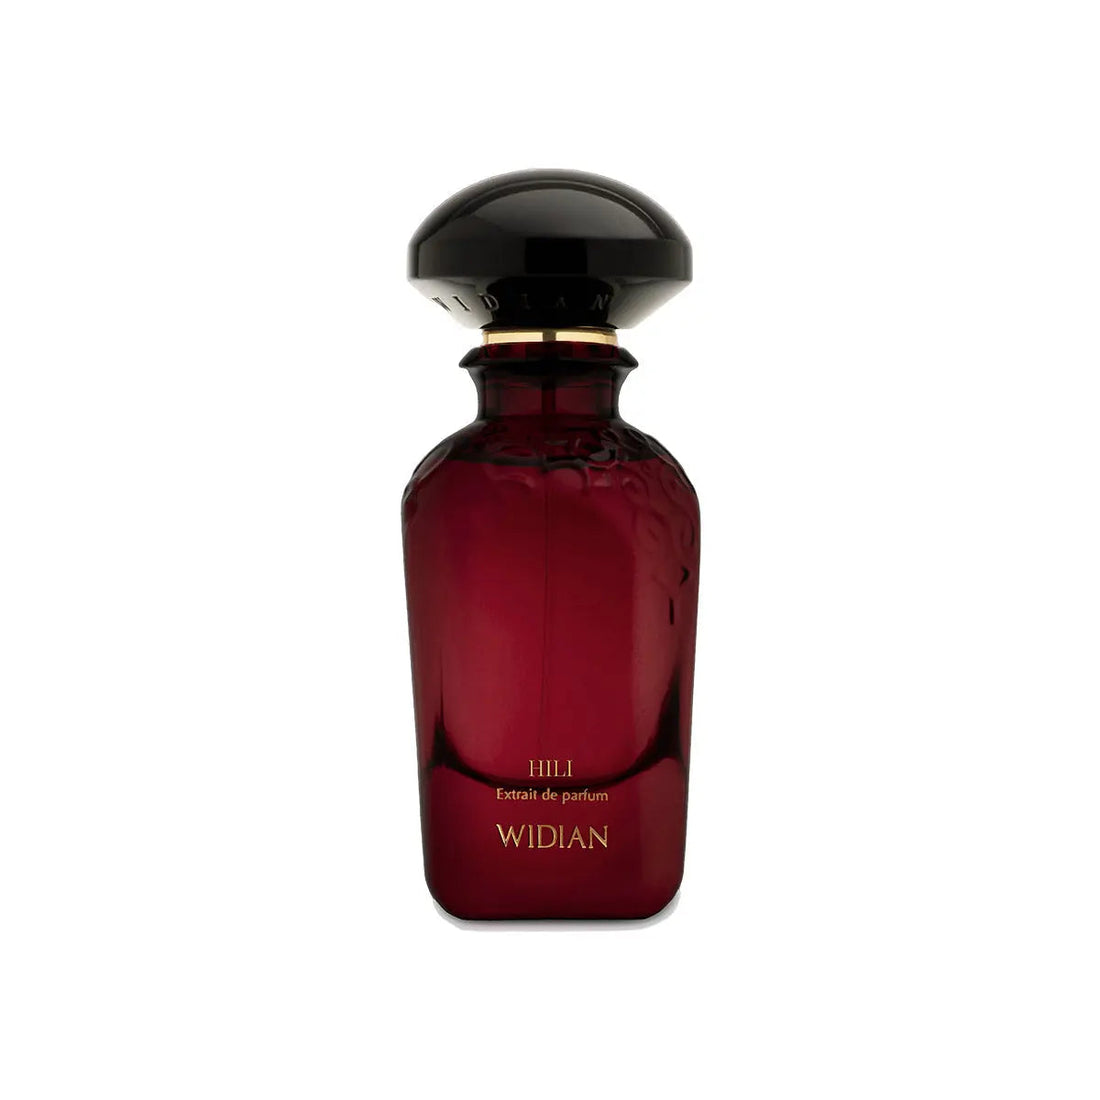 Extracto de perfume HILI Widian - 50 ml